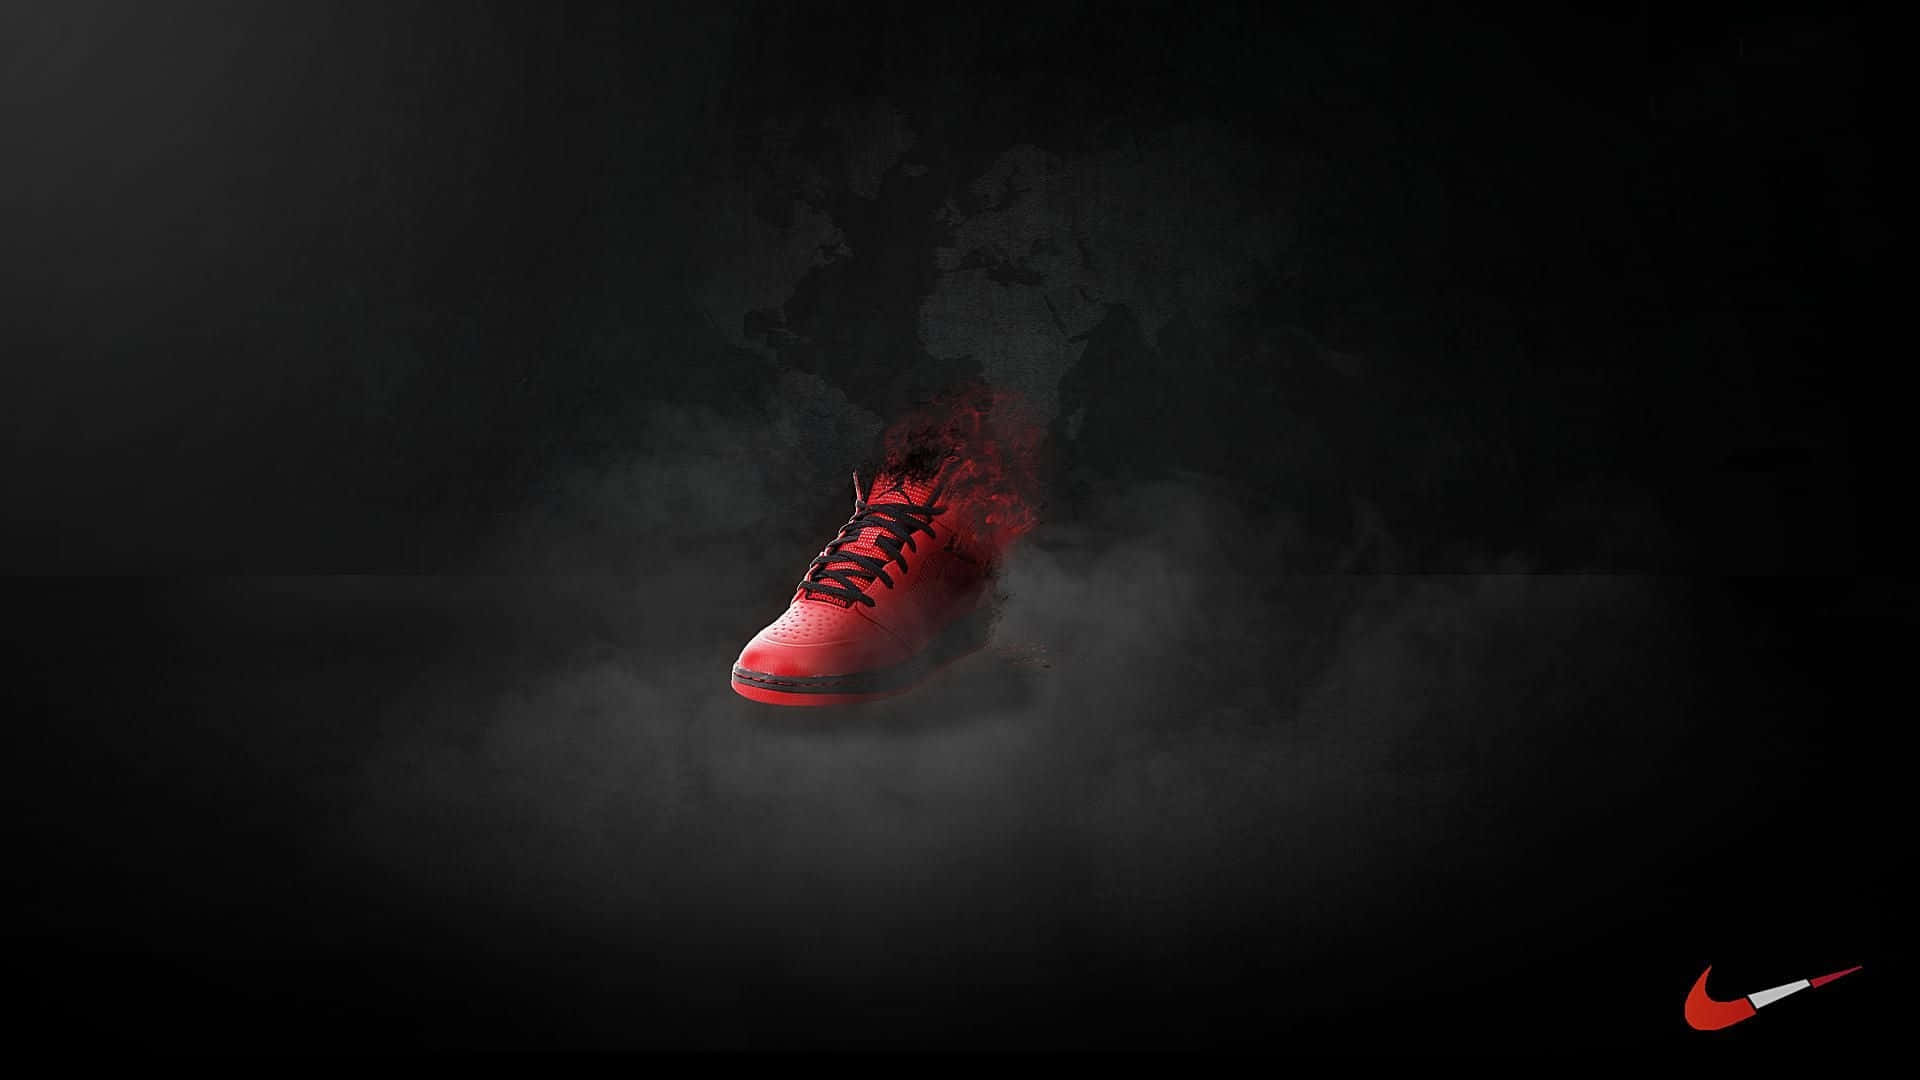 Stellar Red Nike Sneakers In Action Wallpaper